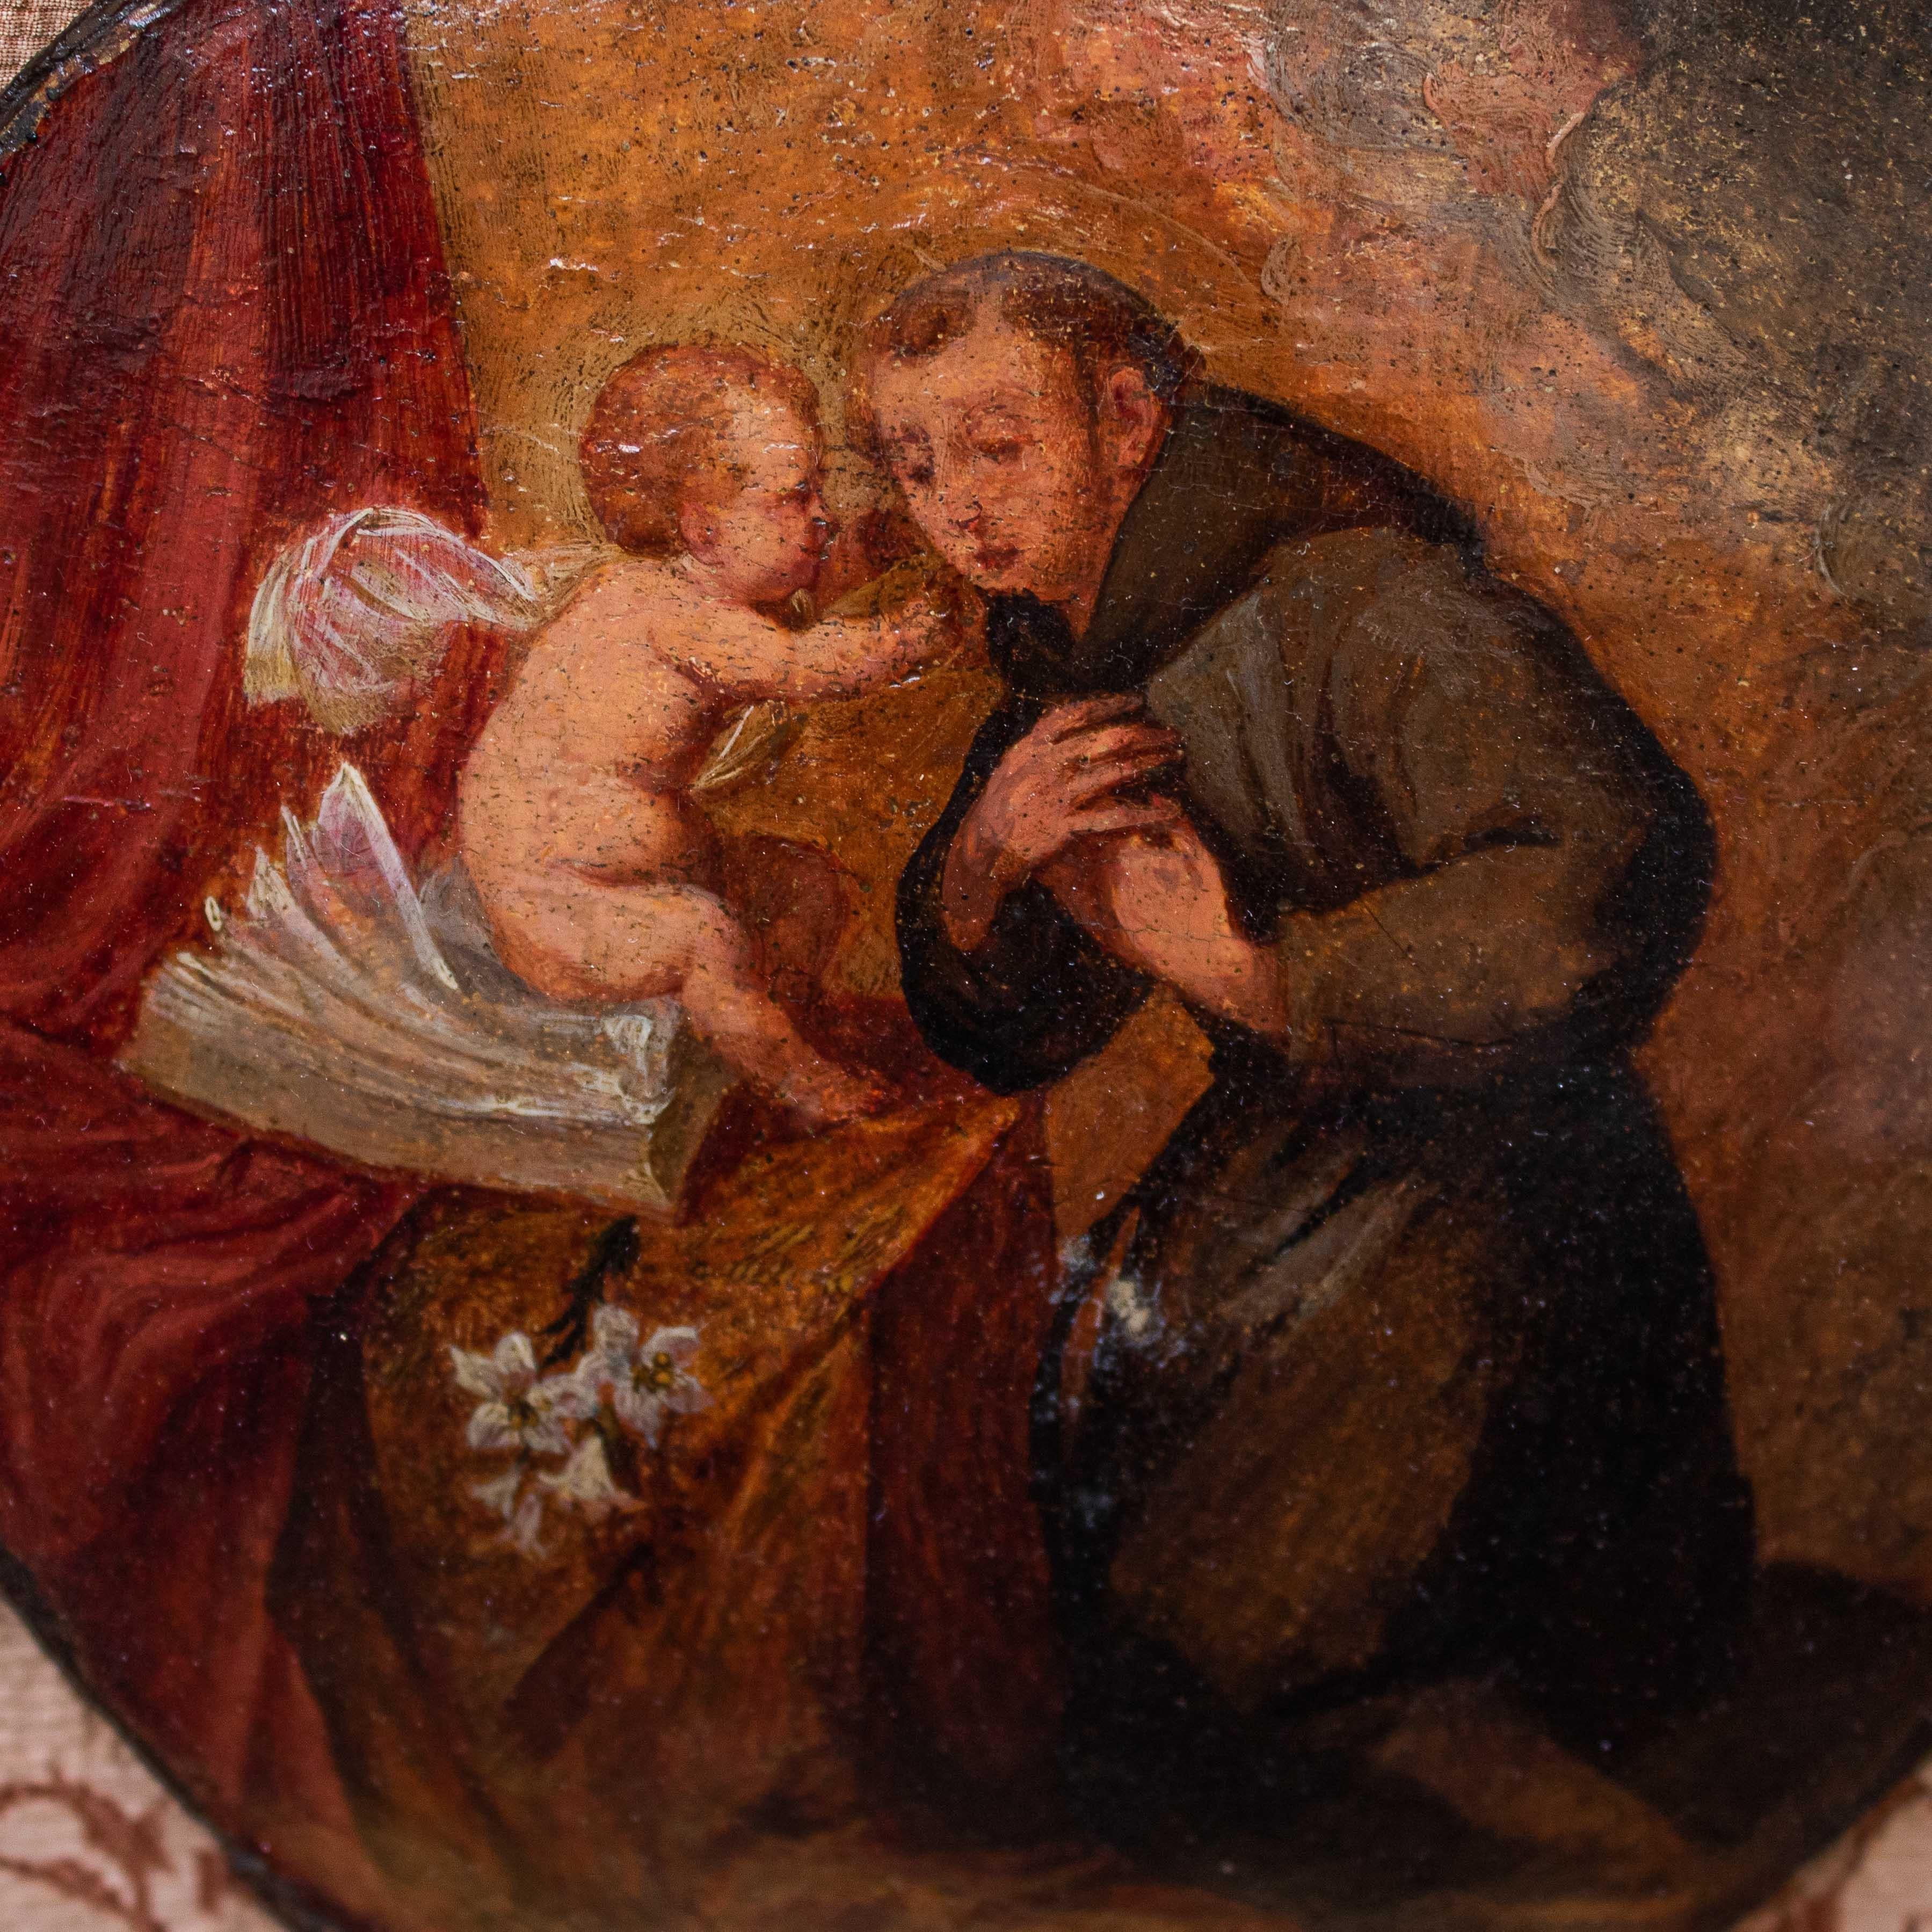 Italian 17th Century Saint Anthony of Padua with Child Jesus Painting Oil on Round Panel